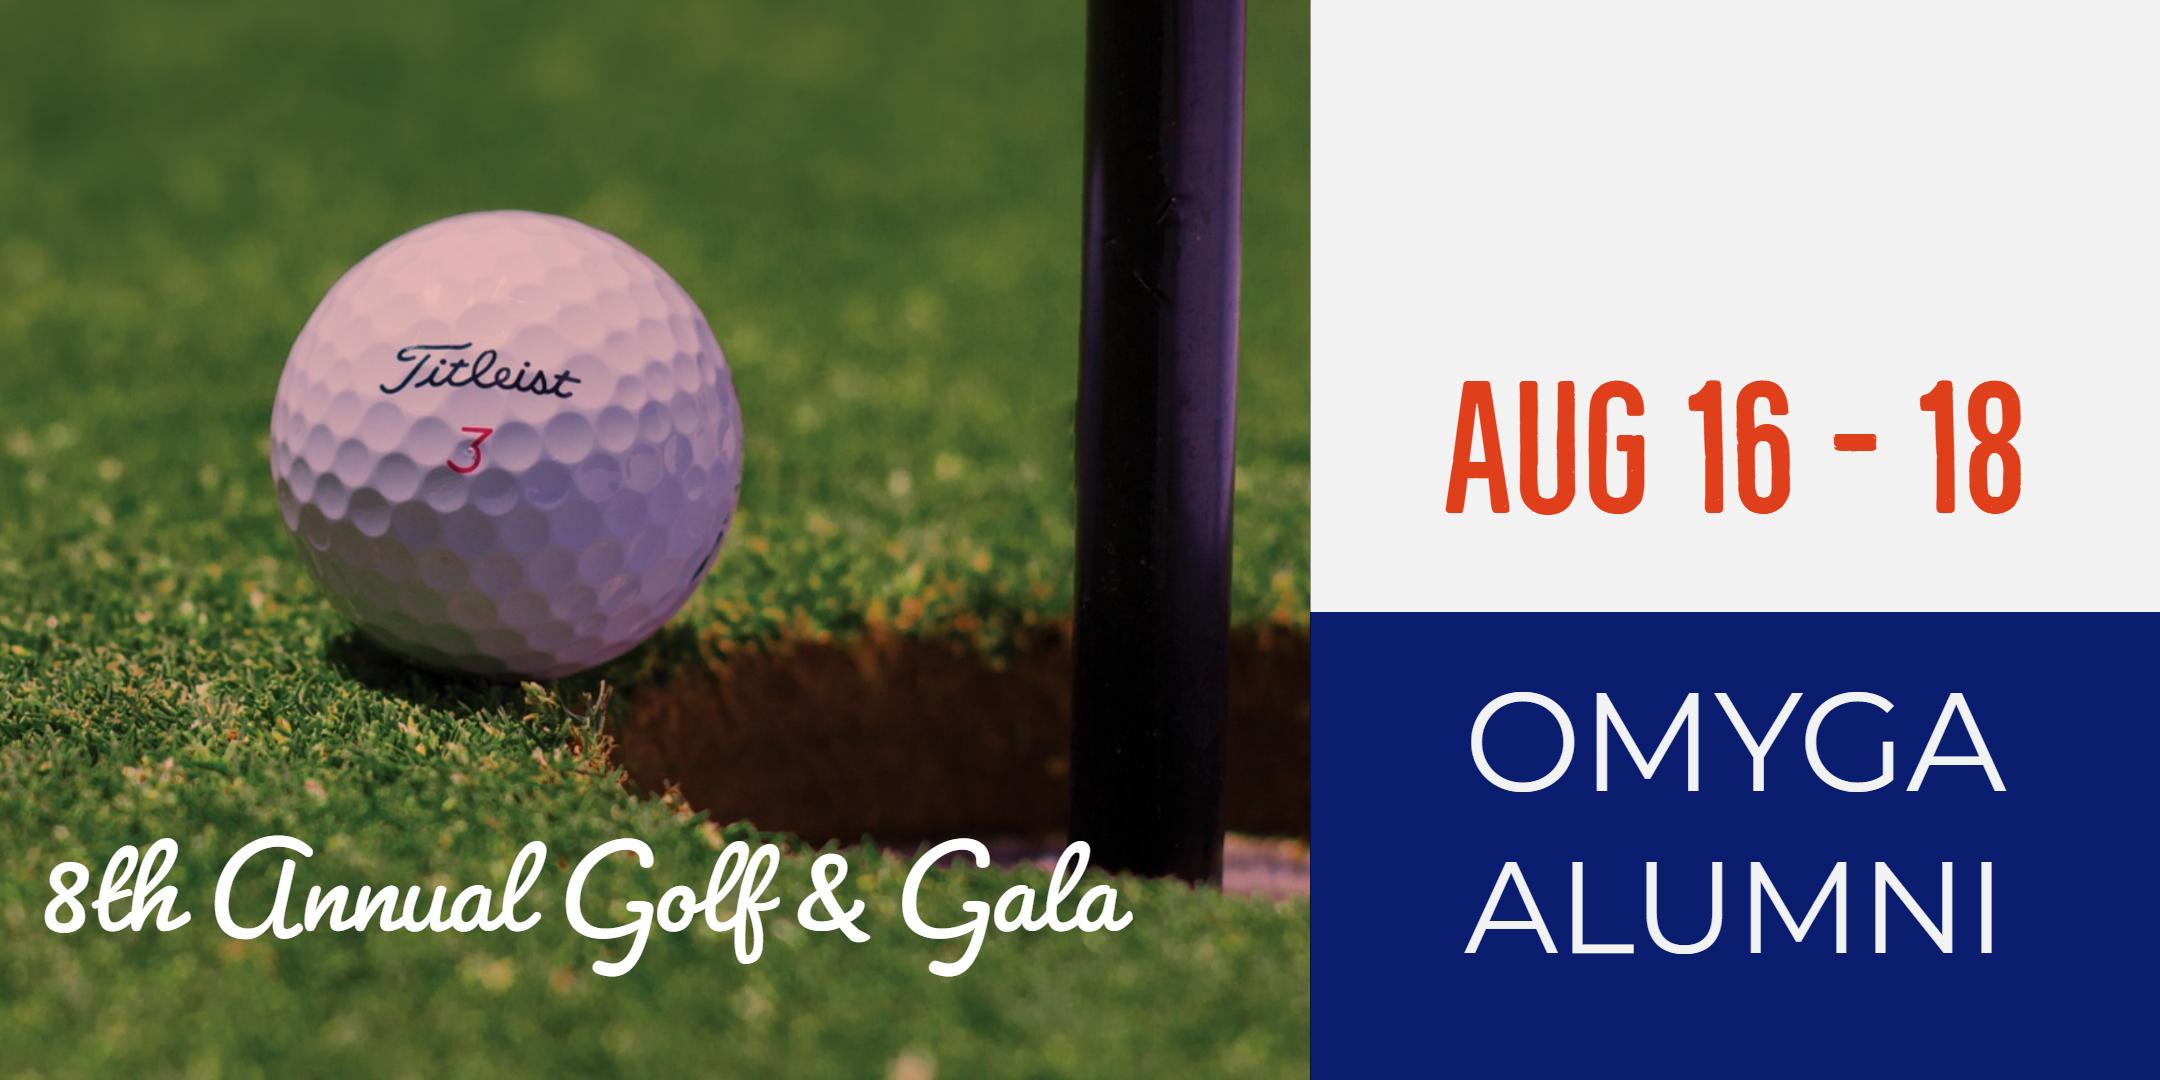 The 8th Annual OMYGA Alumni Golf & Gala Event